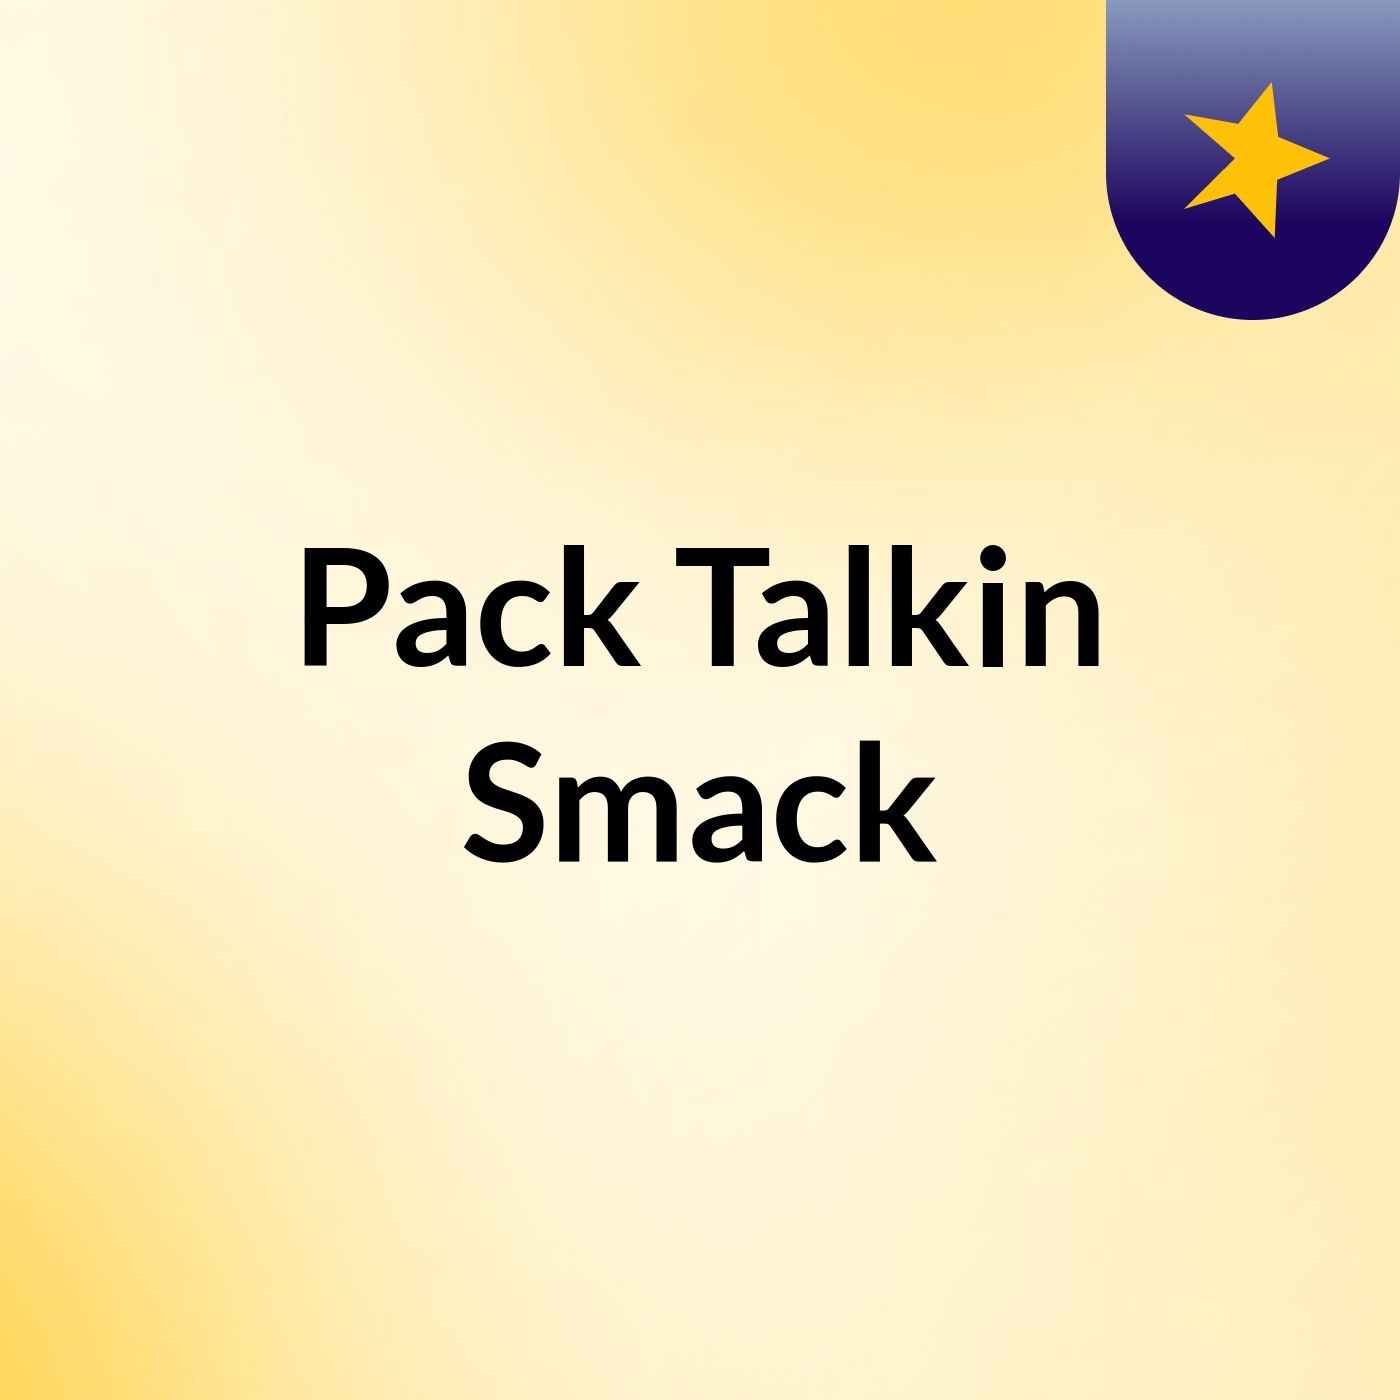 Pack Talkin Smack